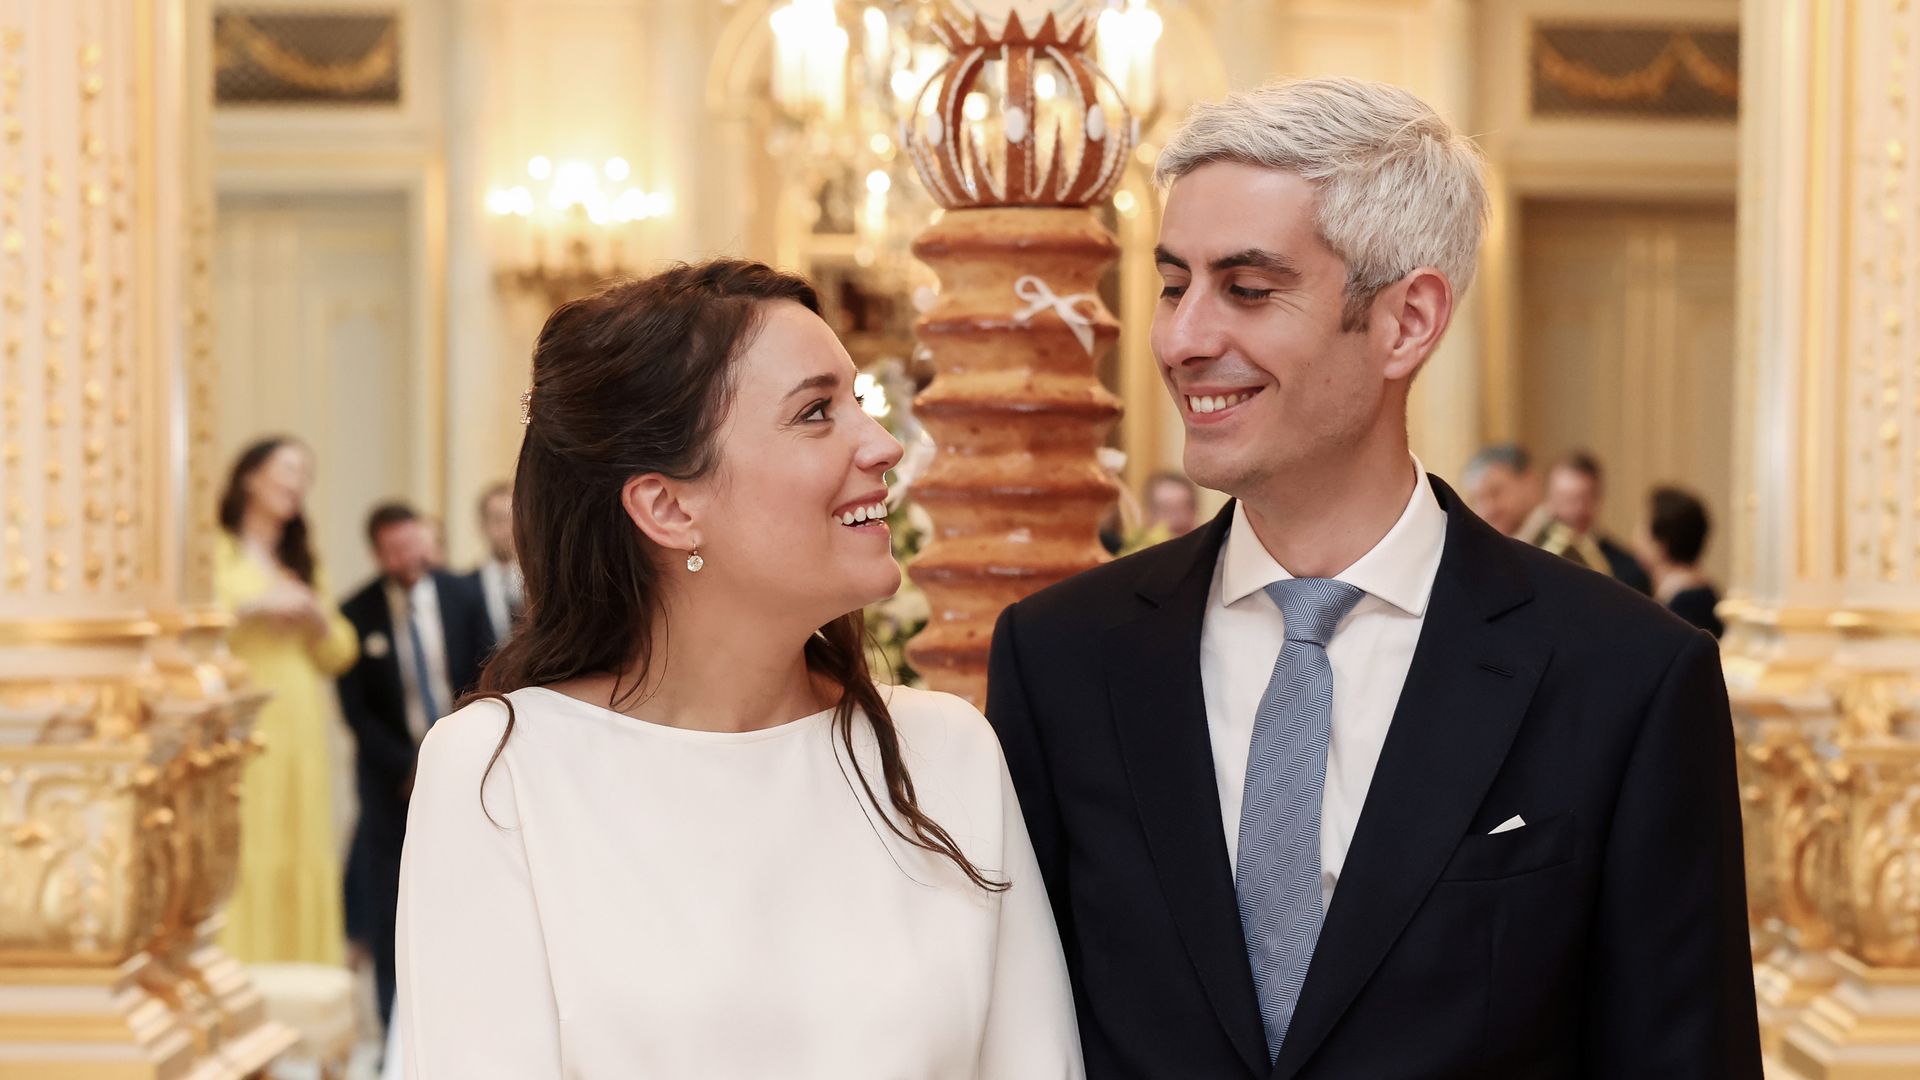 HRH Princess Alexander and Nicolas Bagory tie the knot in a civil ceremony